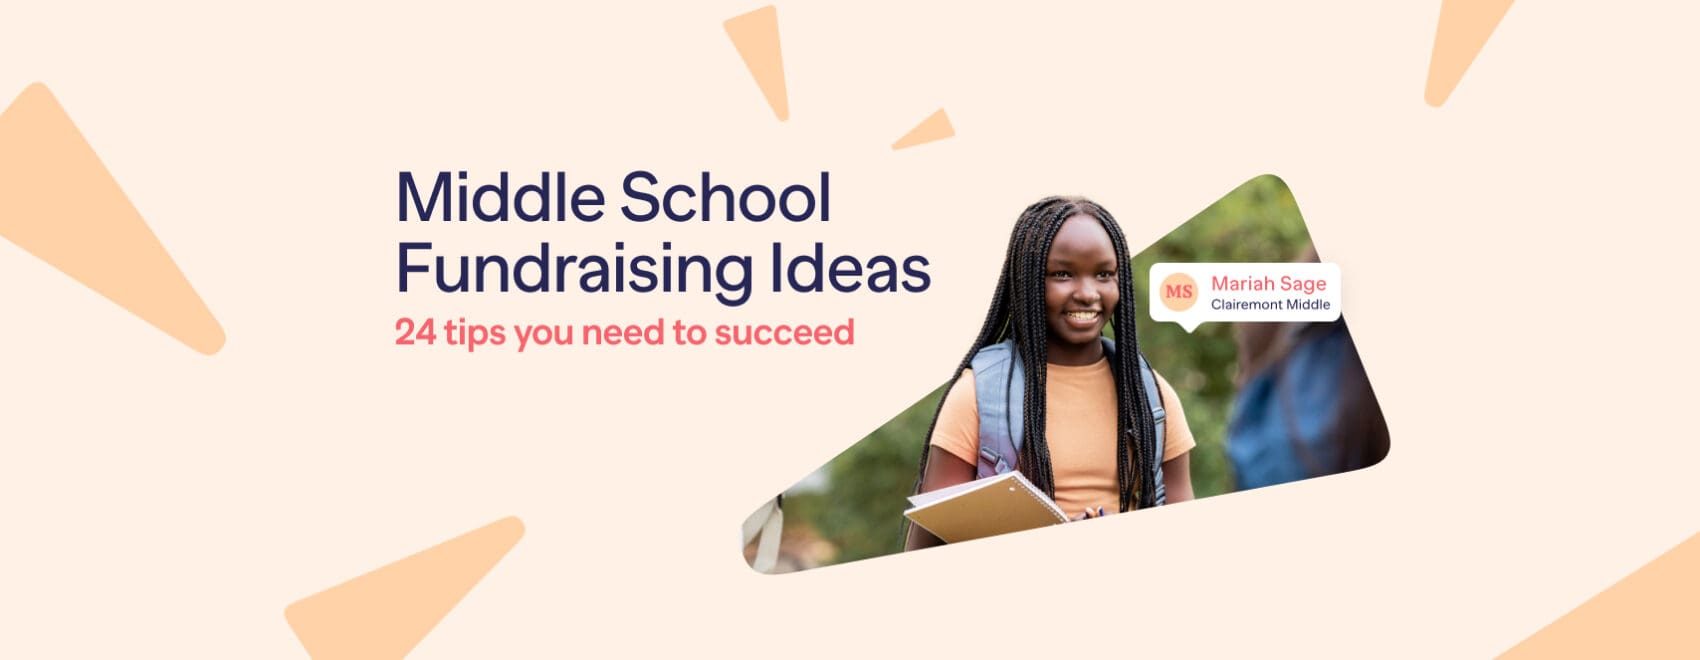 Middle school fundraising ideas